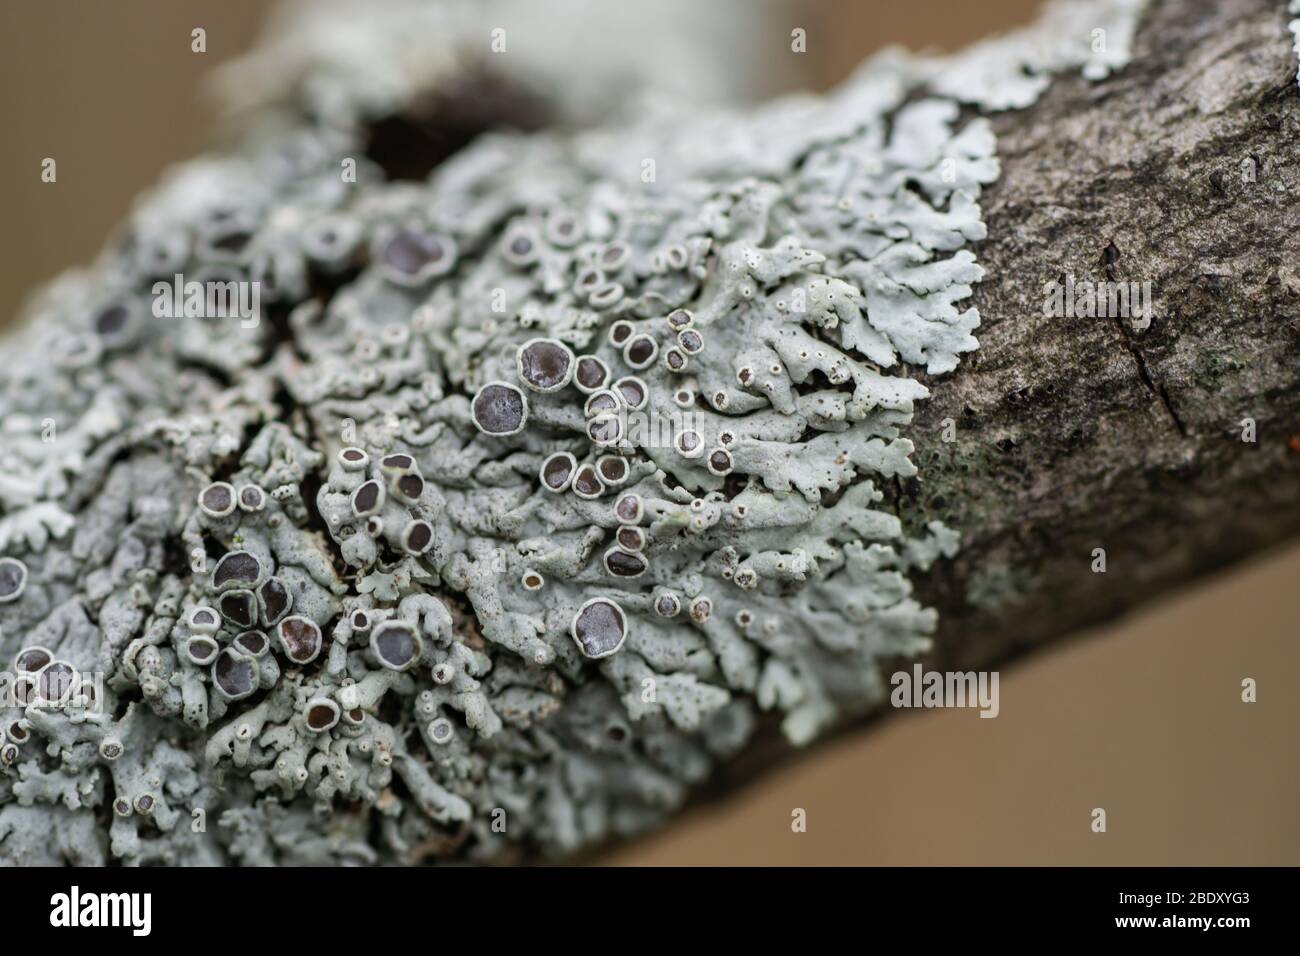 Rosette Lichen on Tree in Springtime Stock Photo